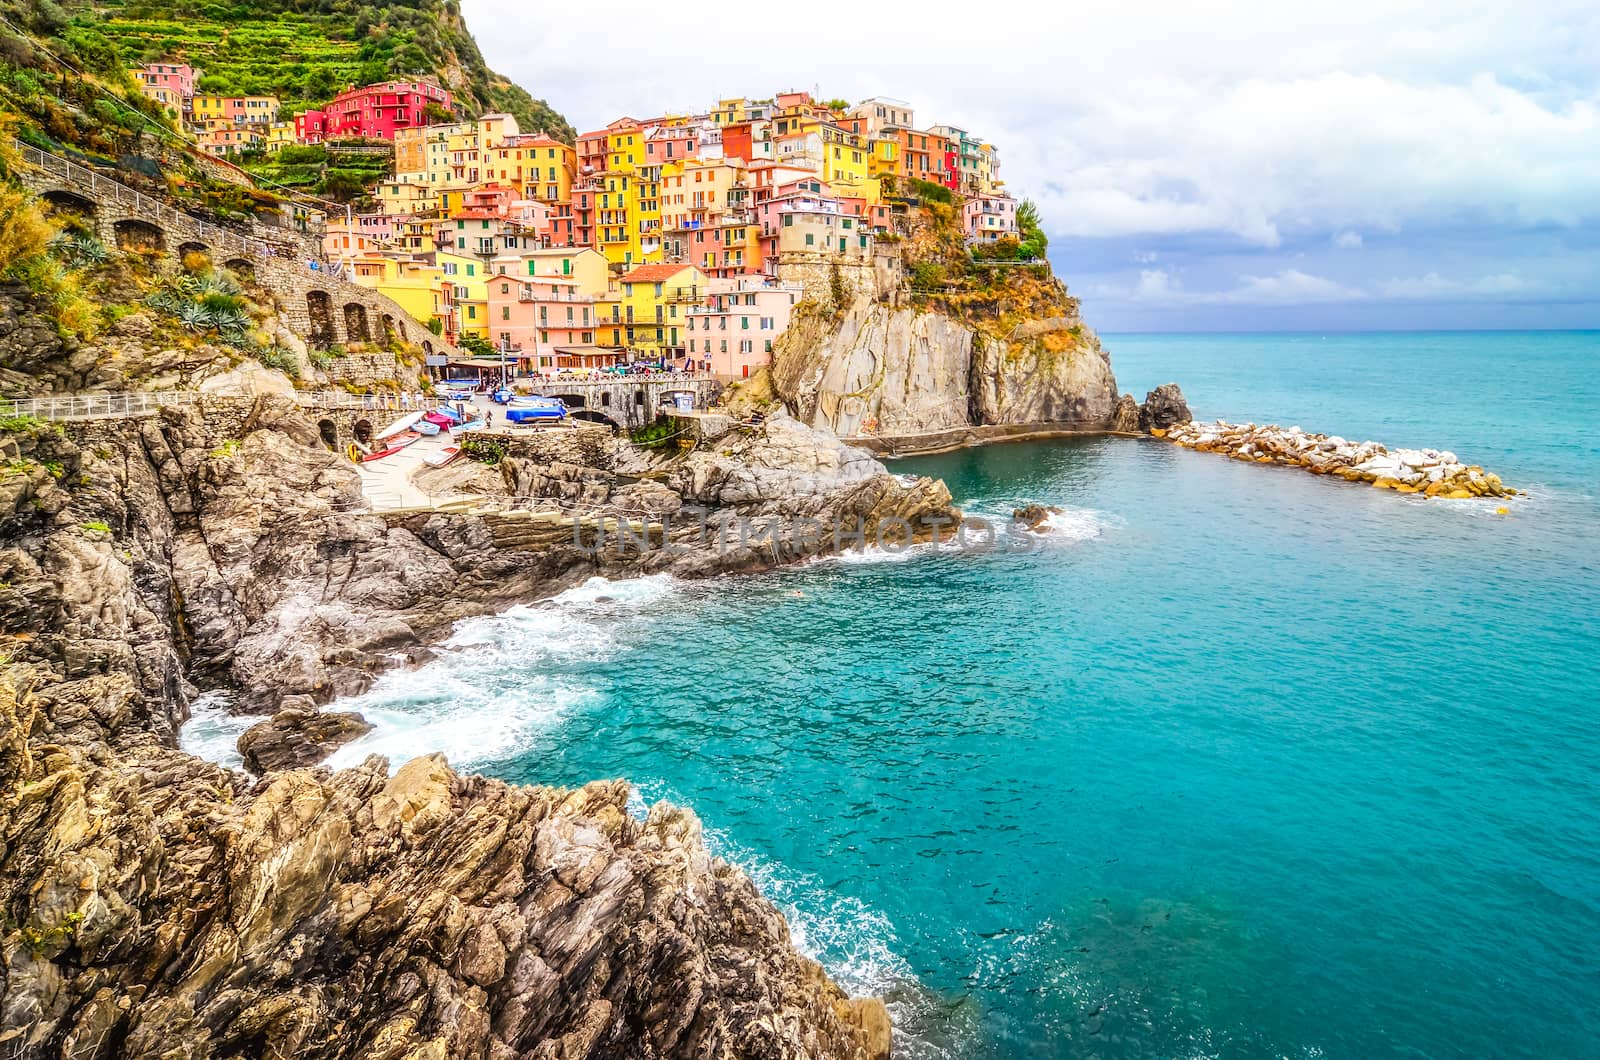 Scenic view of colorful village Manarola in Cinque Terre by martinm303